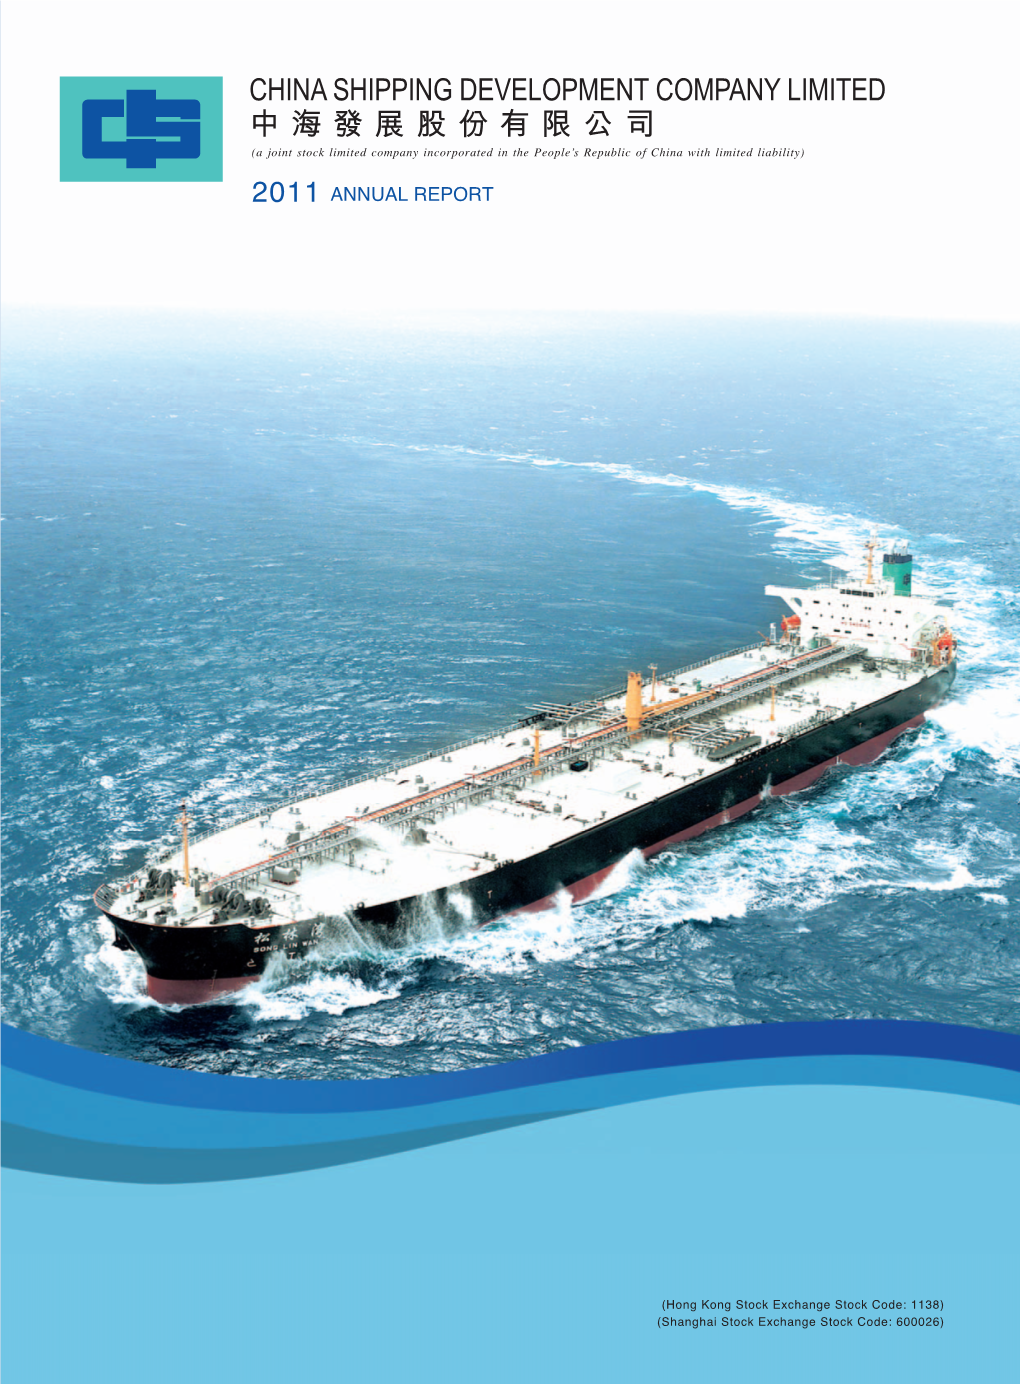 Annual Report 2011 CHINA SHIPPING DEVELOPMENT COMPANY LIMITED 1 COMPANY PROFILE